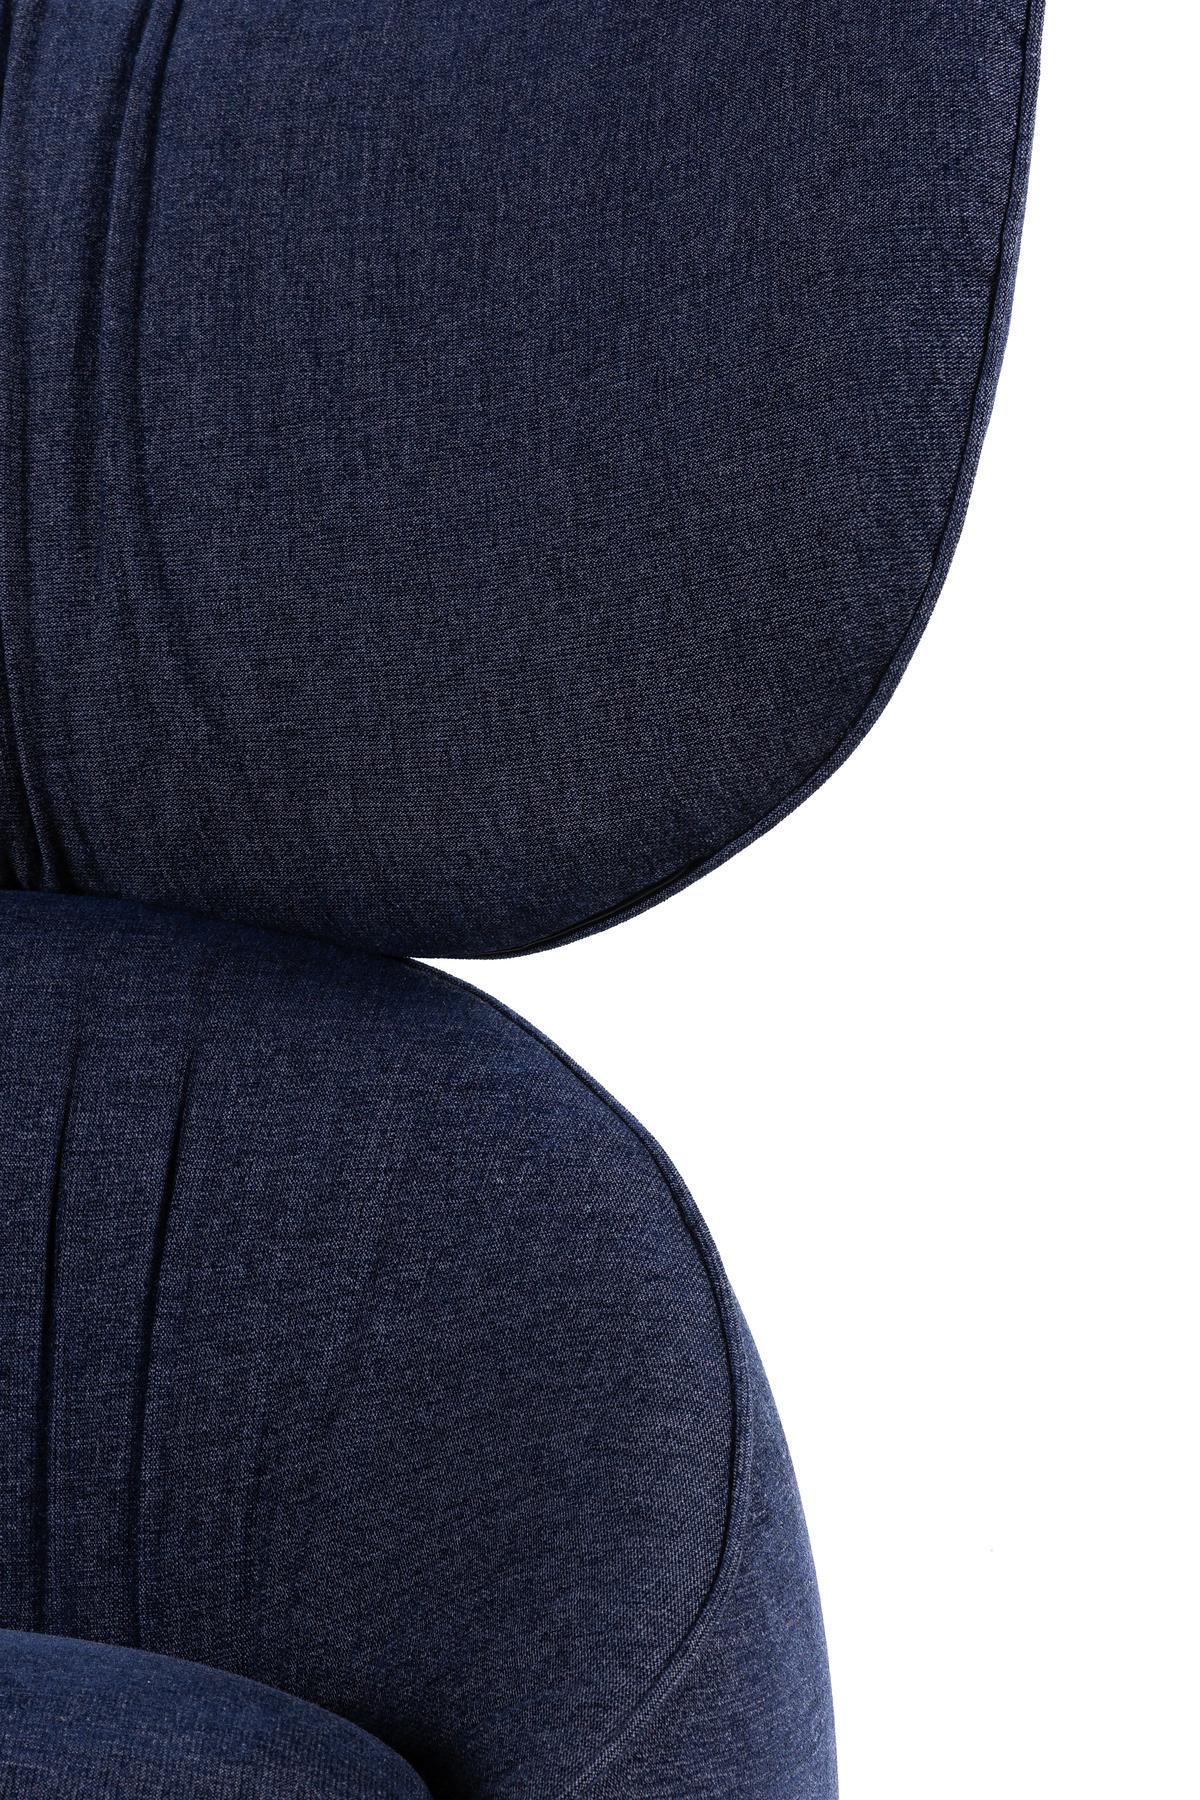 Moooi Hana Wingback Swivel Chair in Liscio, Grigio Blue Upholstery For Sale 2